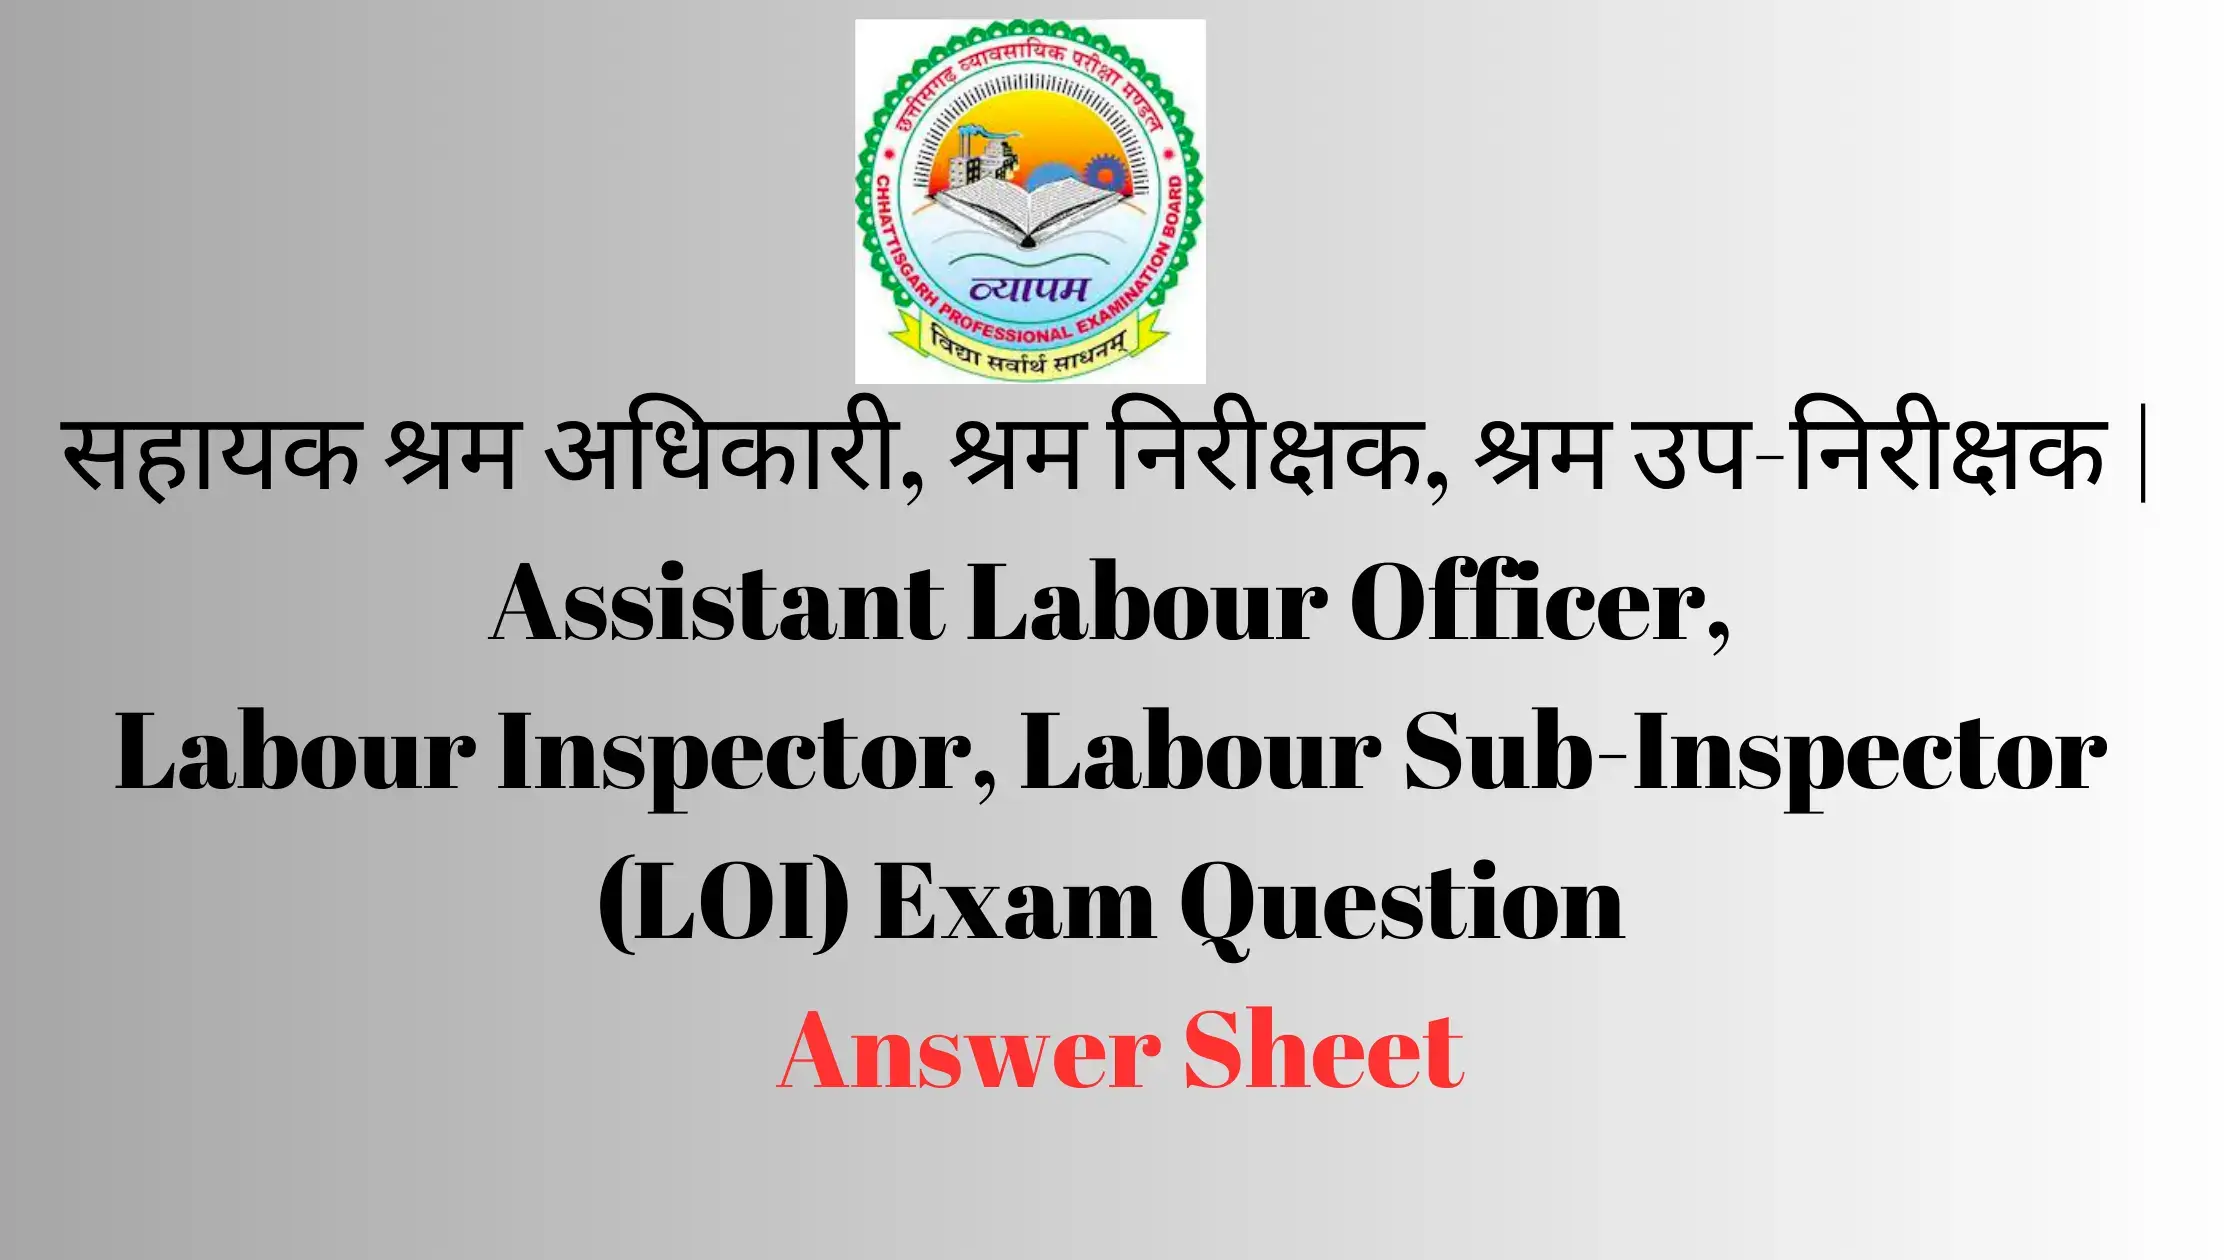 सहायक श्रम अधिकारी, श्रम निरीक्षक, श्रम उप-निरीक्षक Assistant Labour Officer, Labour Inspector, Labour Sub-Inspector (LOI) Exam Question Answer Sheet (1)